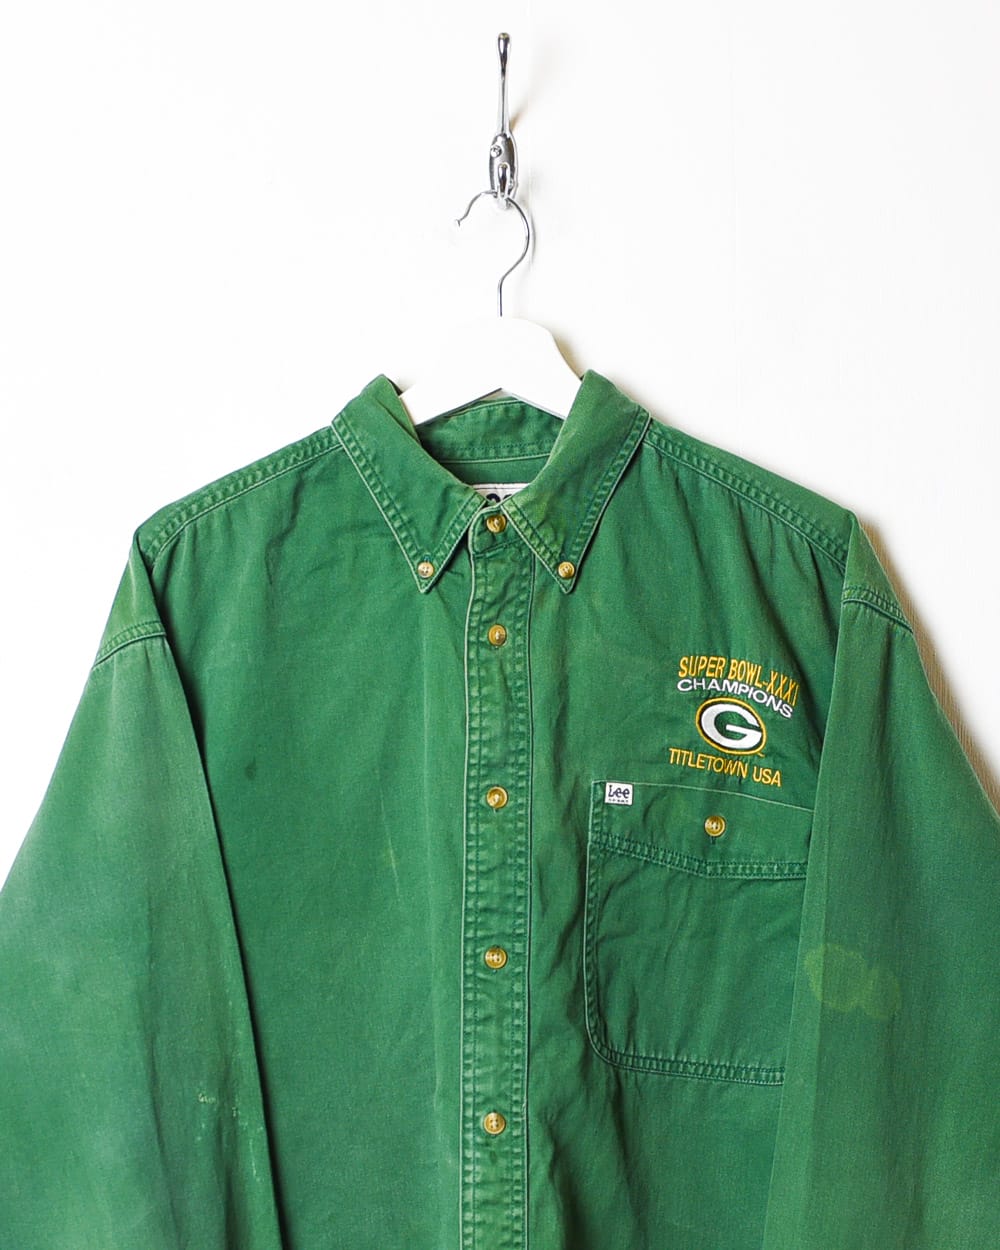 Green Lee Sport Green Bay Packers Super Bowl XXI Champions Shirt - Large